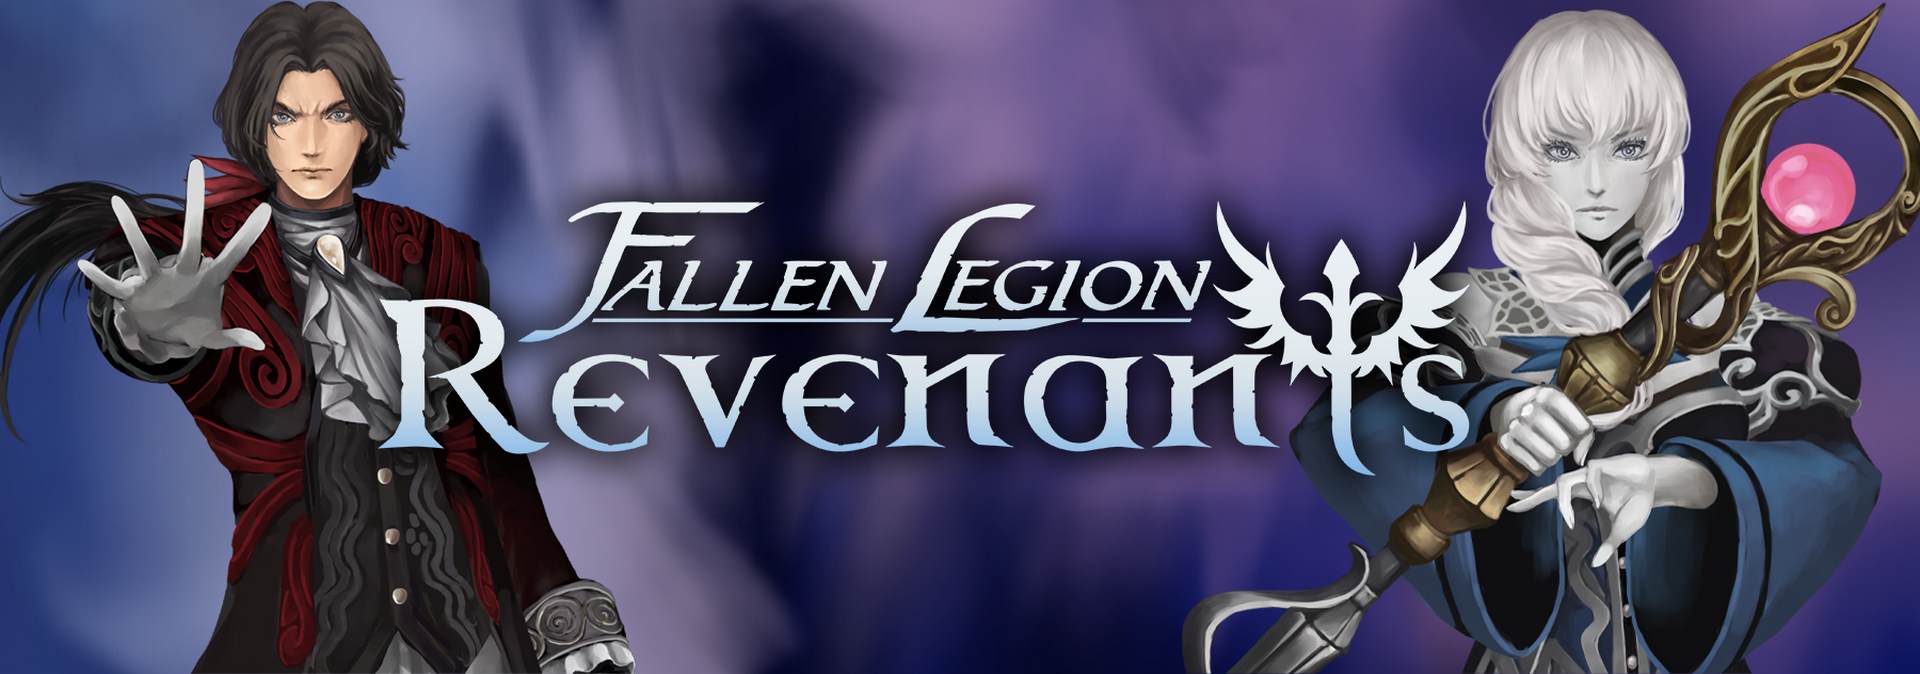 instal the new version for ipod Fallen Legion Revenants